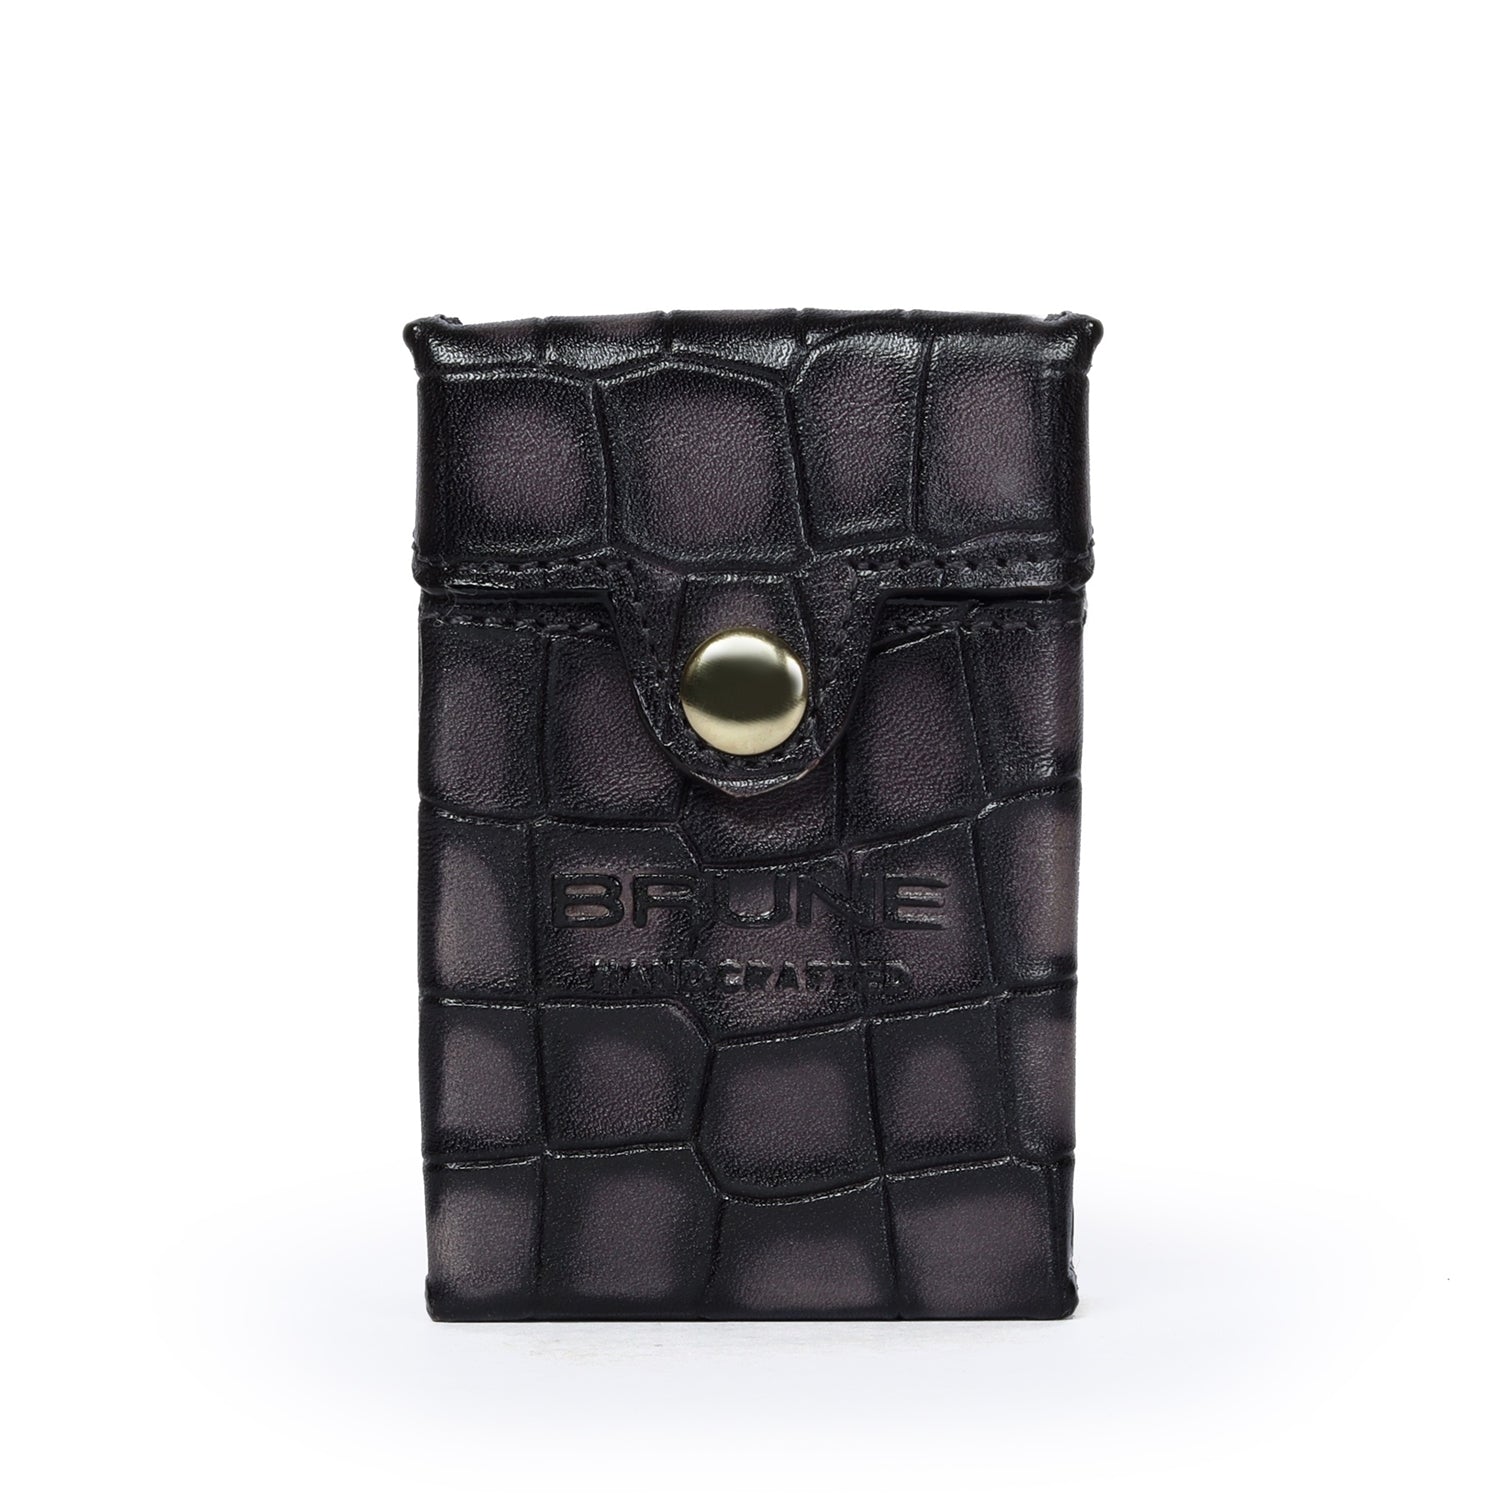 Smokey Finish King Size Grey Deep Cut Croco Print Cigarette Carrying Leather Case By Brune & Bareskin